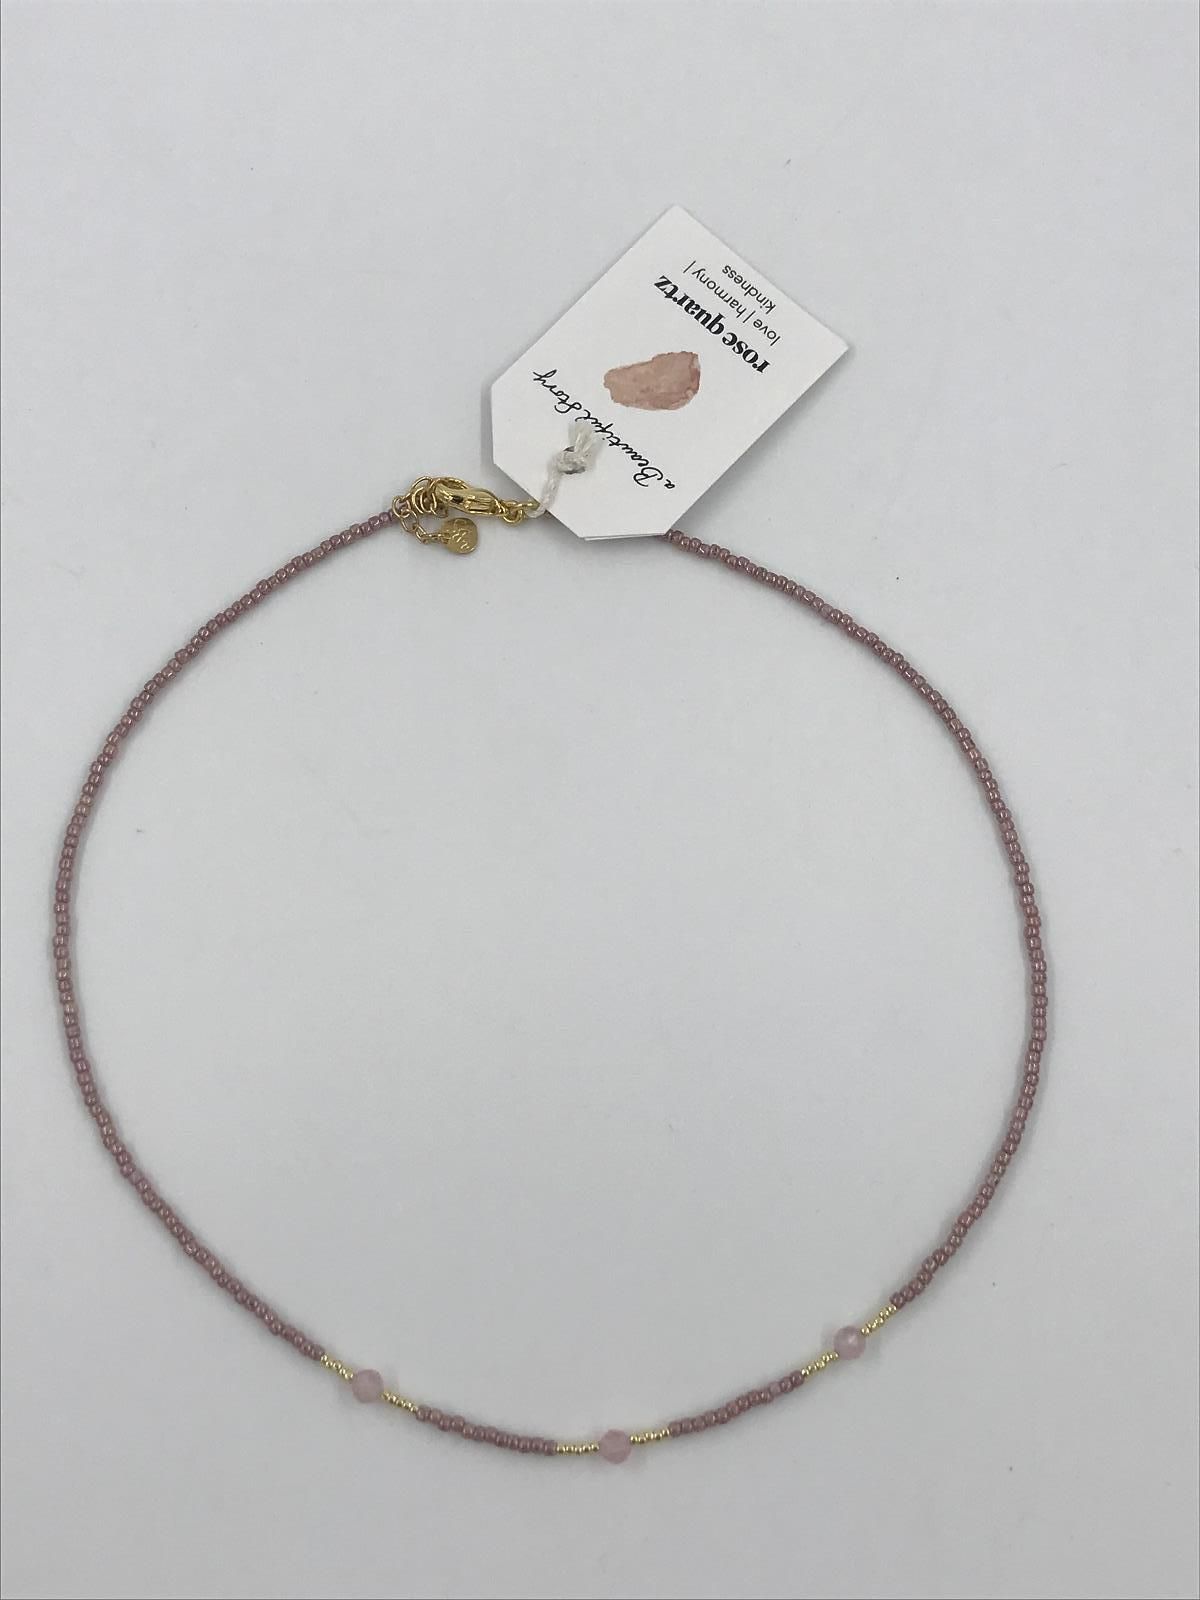 aBStory brightly rose quartz necklace GC (BL23304 brightly rose quartz necklace GC) - Stiletto Schoenen (Oudenaarde)